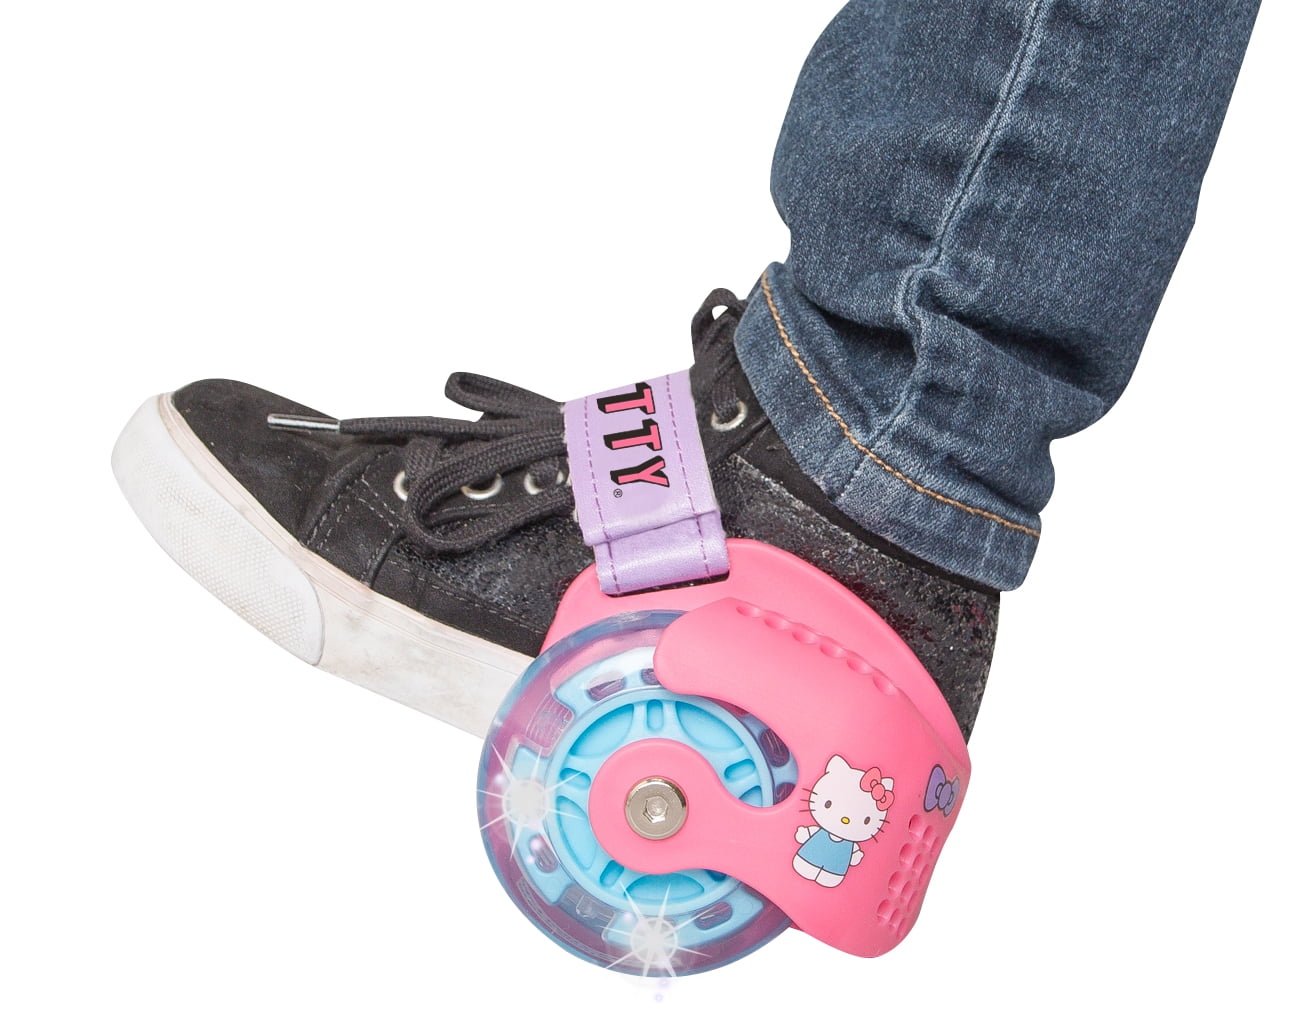 heel wheels skates